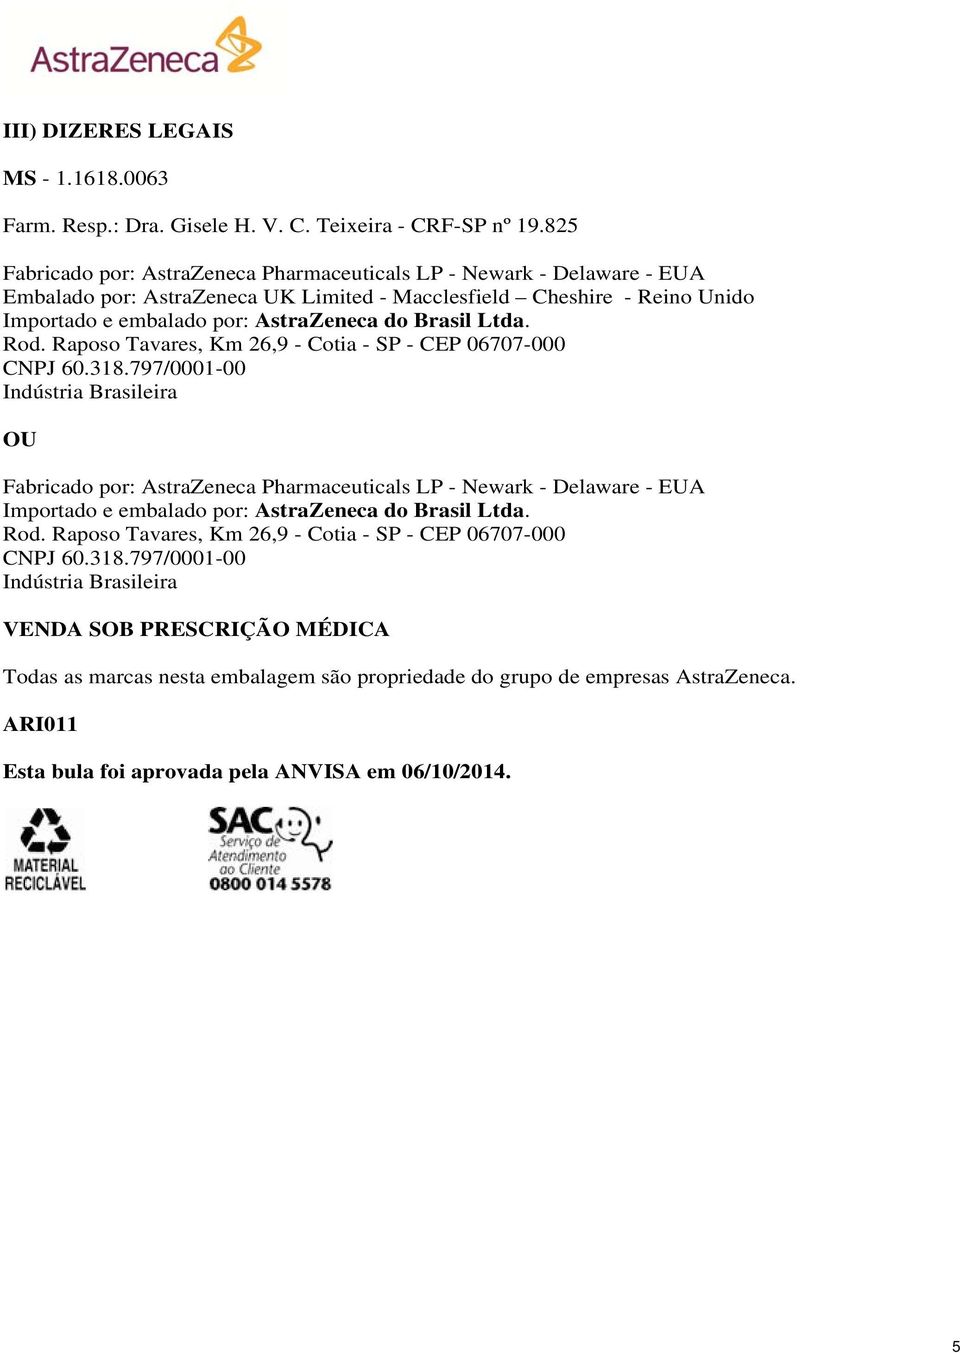 Ltda. Rod. Raposo Tavares, Km 26,9 - Cotia - SP - CEP 06707-000 CNPJ 60.318.